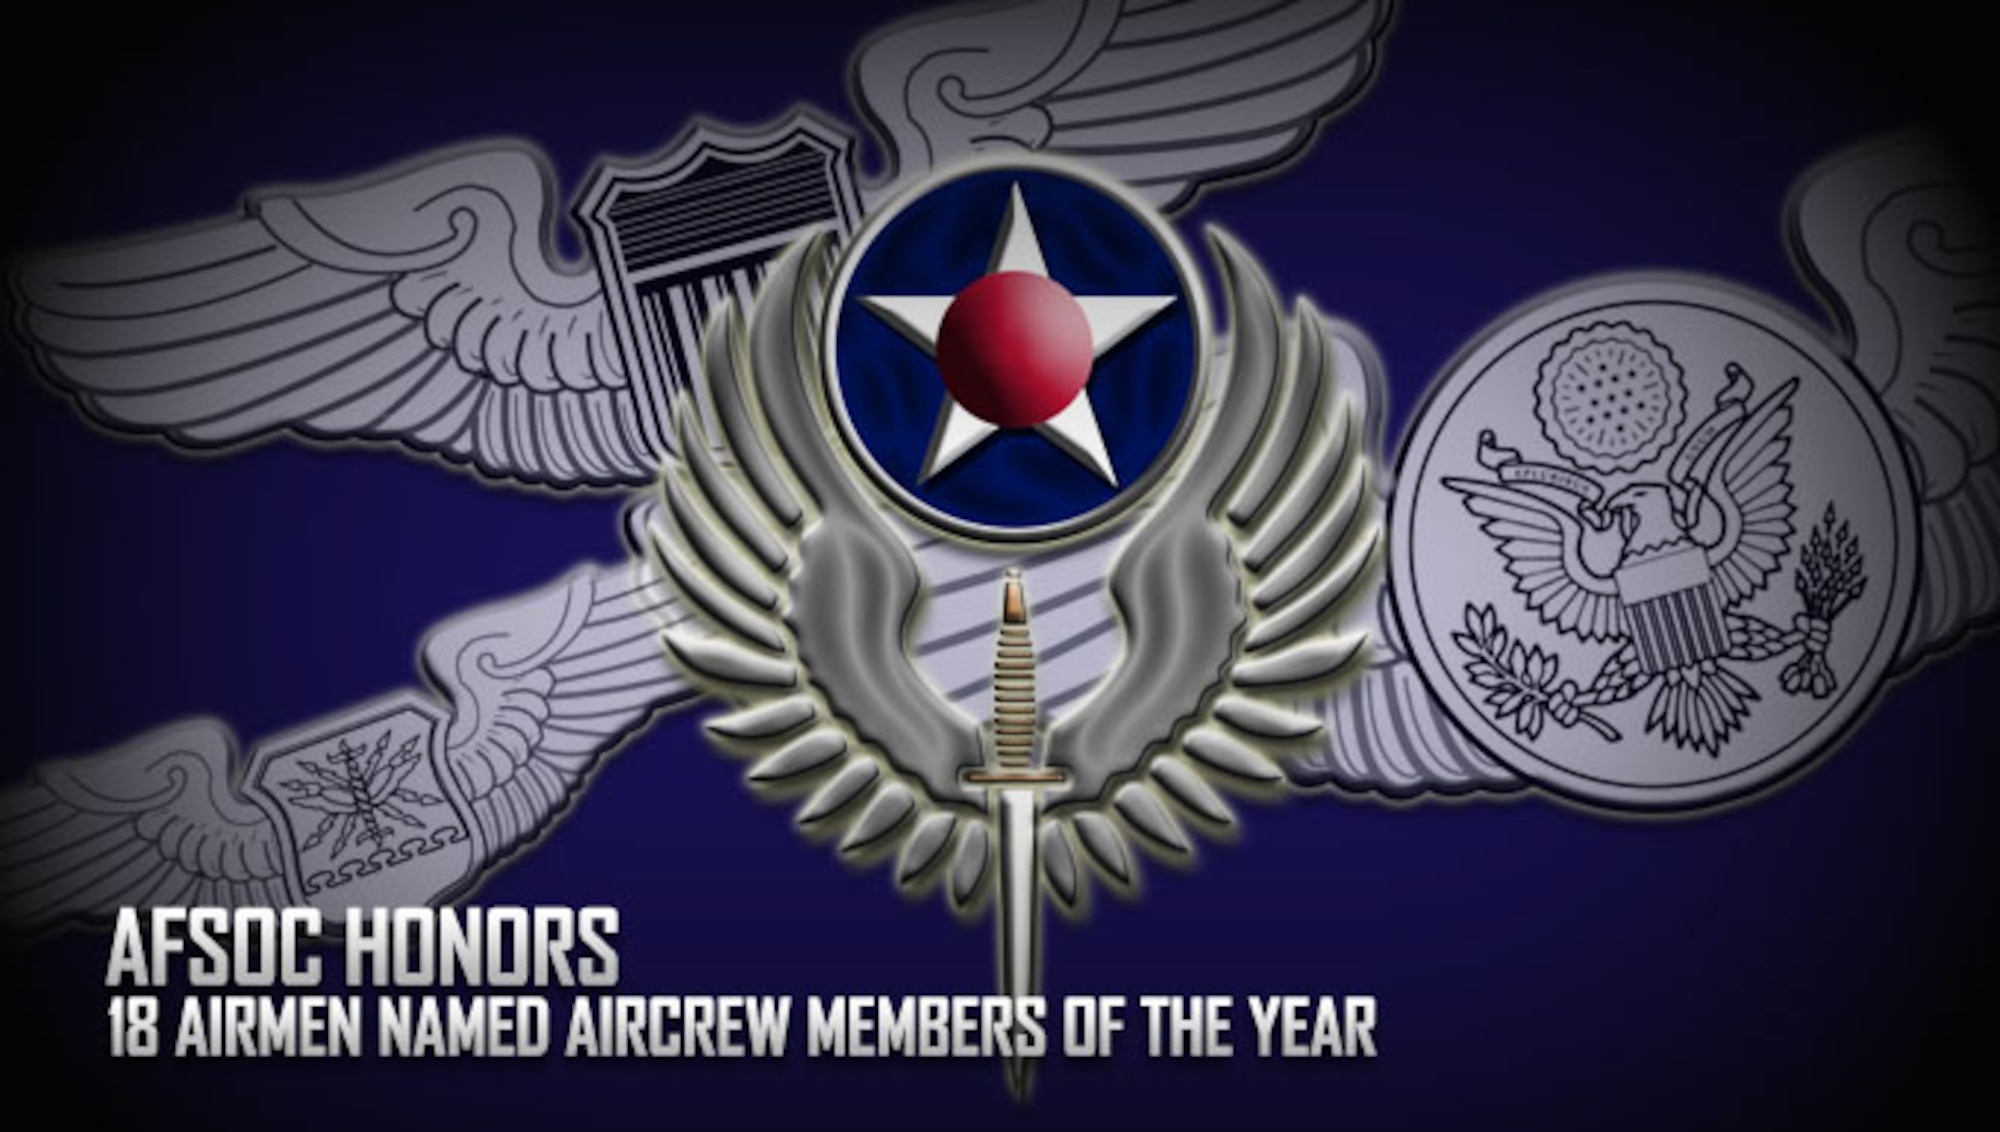 AFSOC honors 18 Airmen as 2015 aircrew members of the year